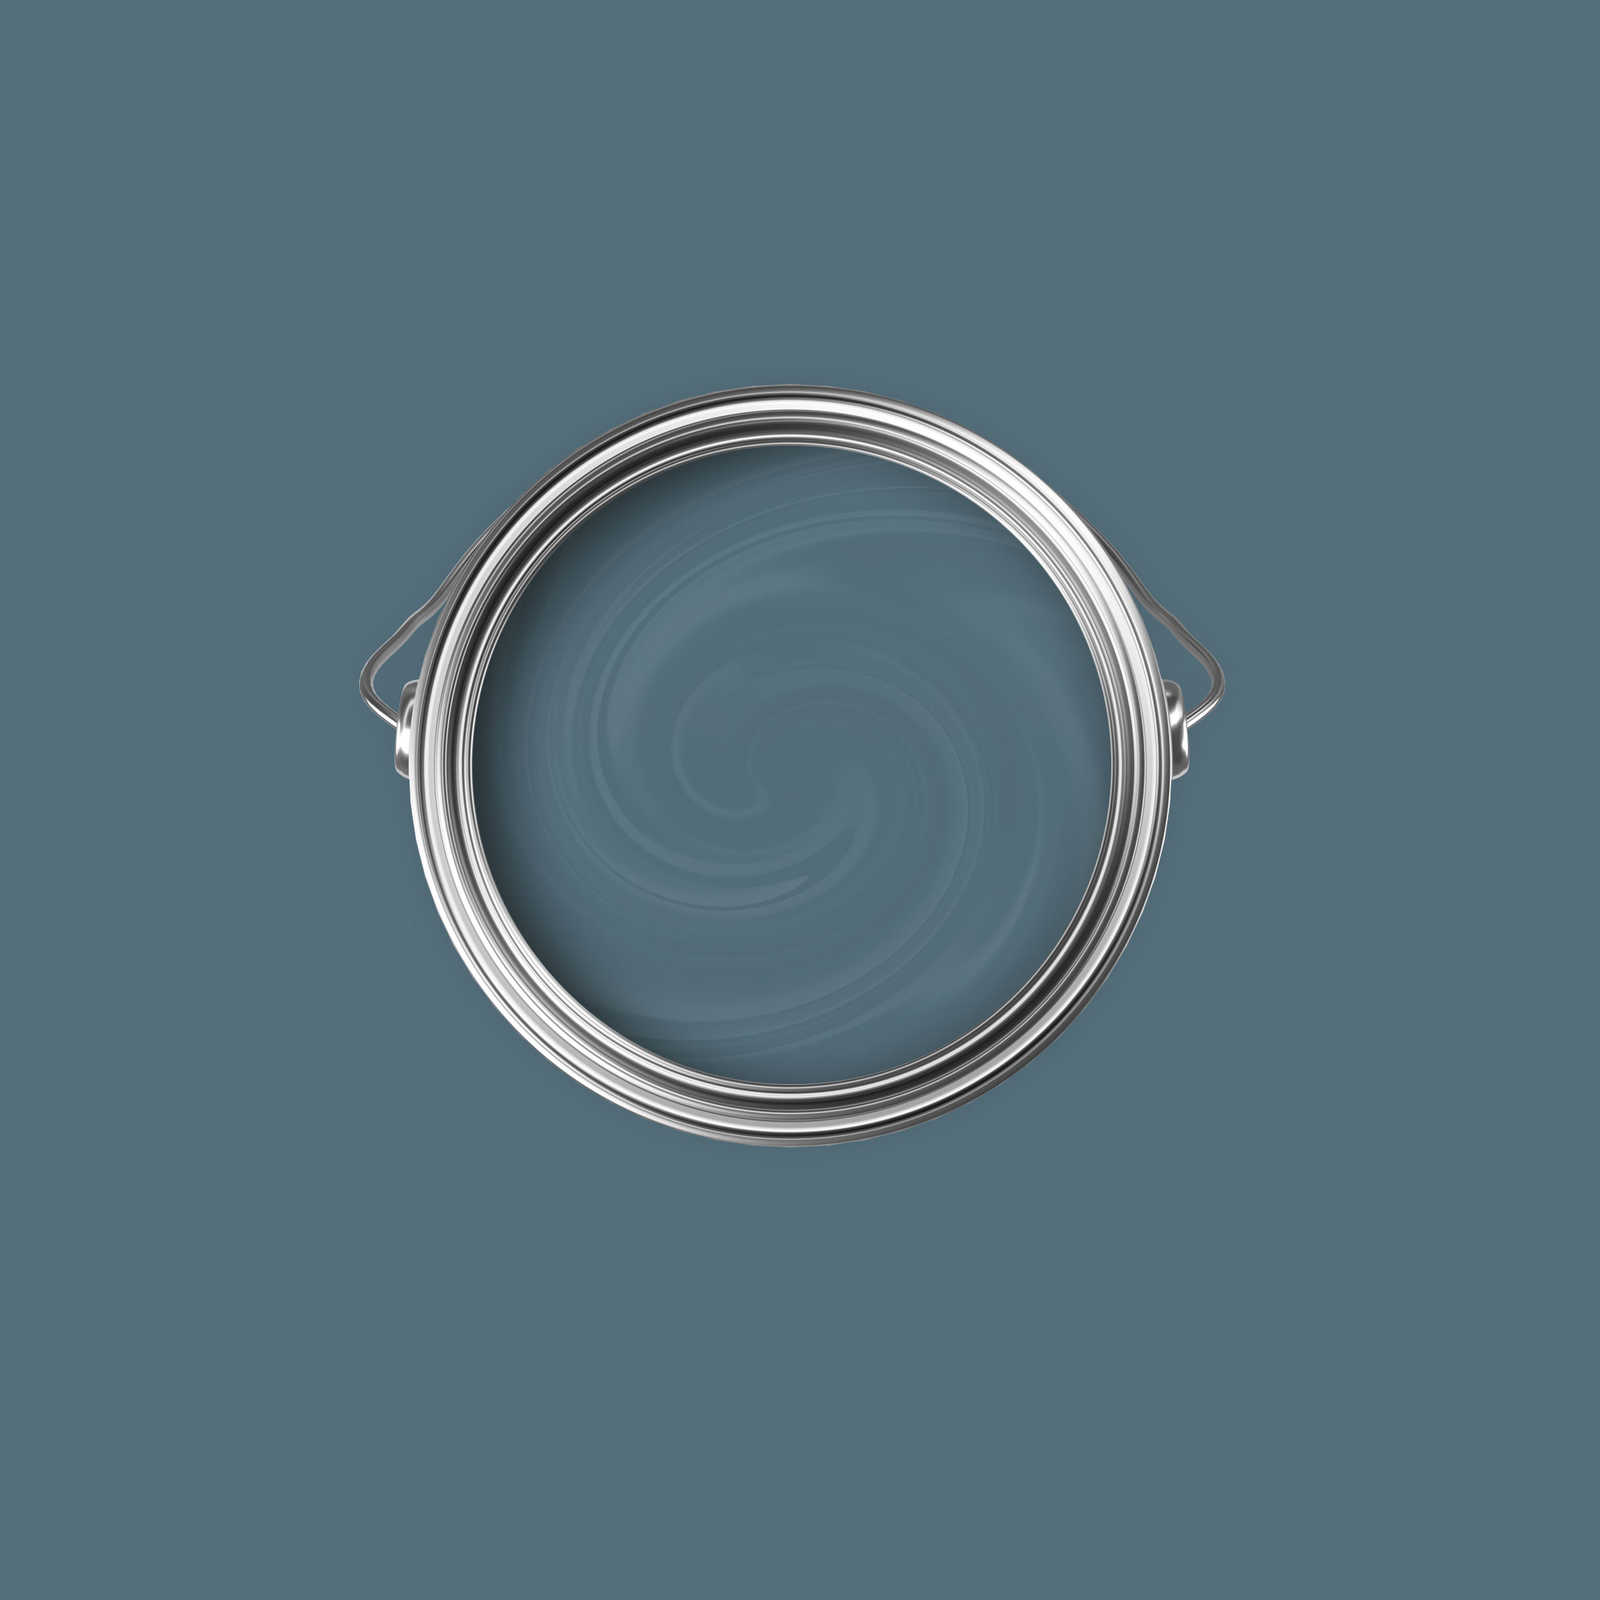             Premium Wandfarbe ausgeglichenes Taubenblau »Balanced Blue« NW312 – 2,5 Liter
        